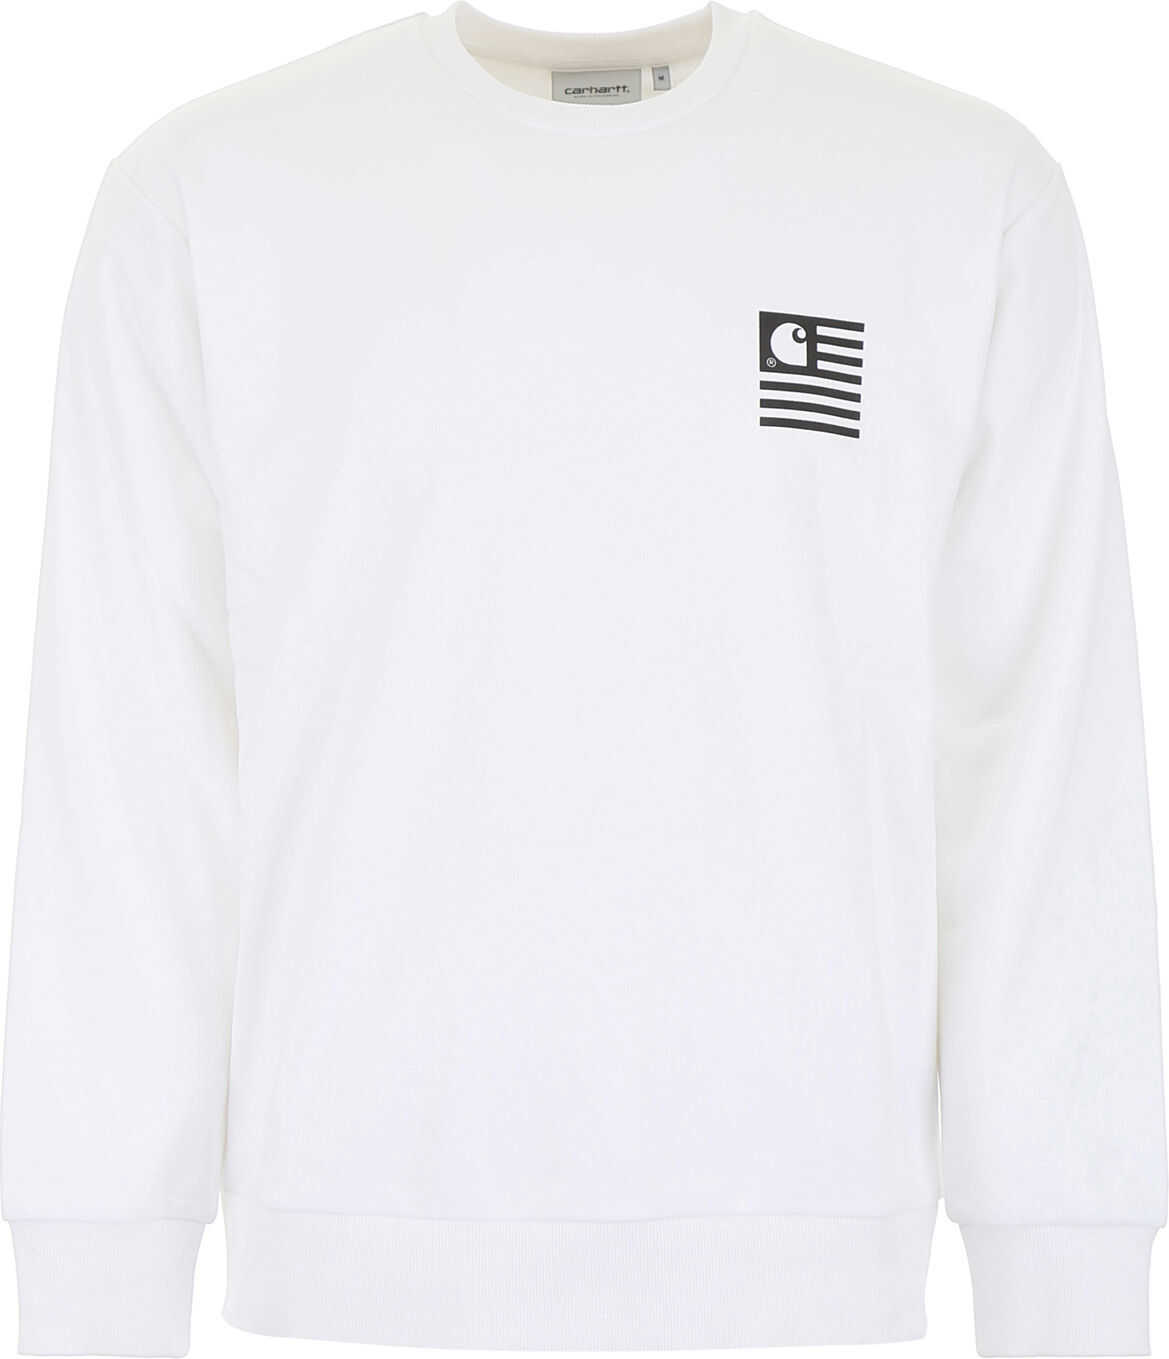 Carhartt State Patch Sweatshirt WHITE